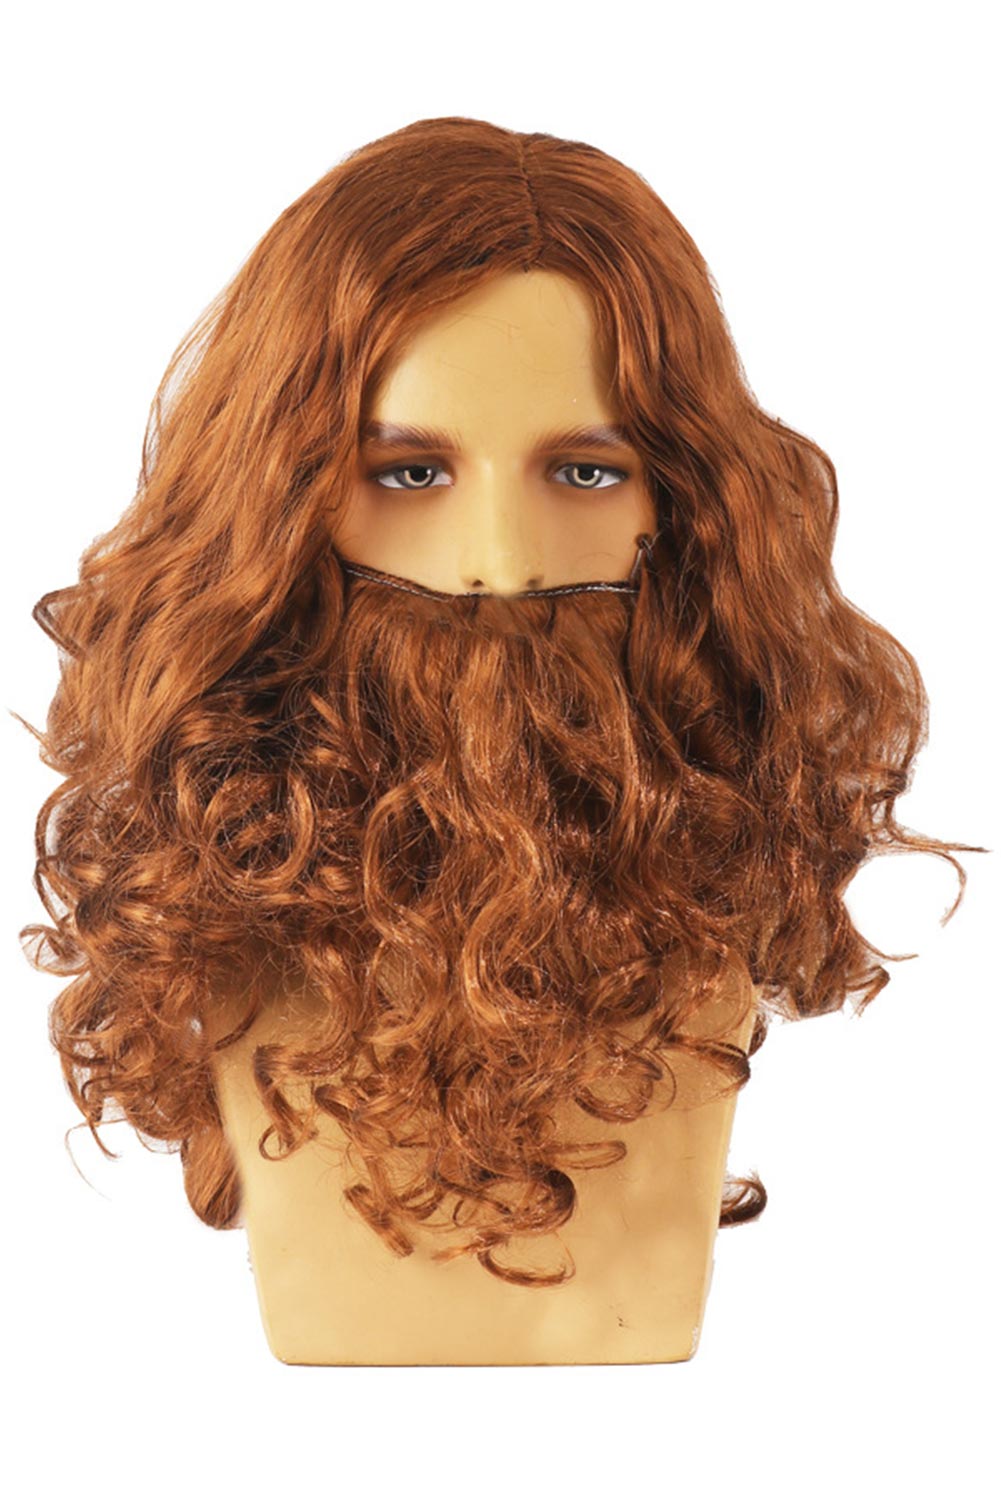 Jesus Santa Claus Kids Adult Cosplay Wig Long Curly Hair Heat Resistant Synthetic Hair Halloween Costume Accessories